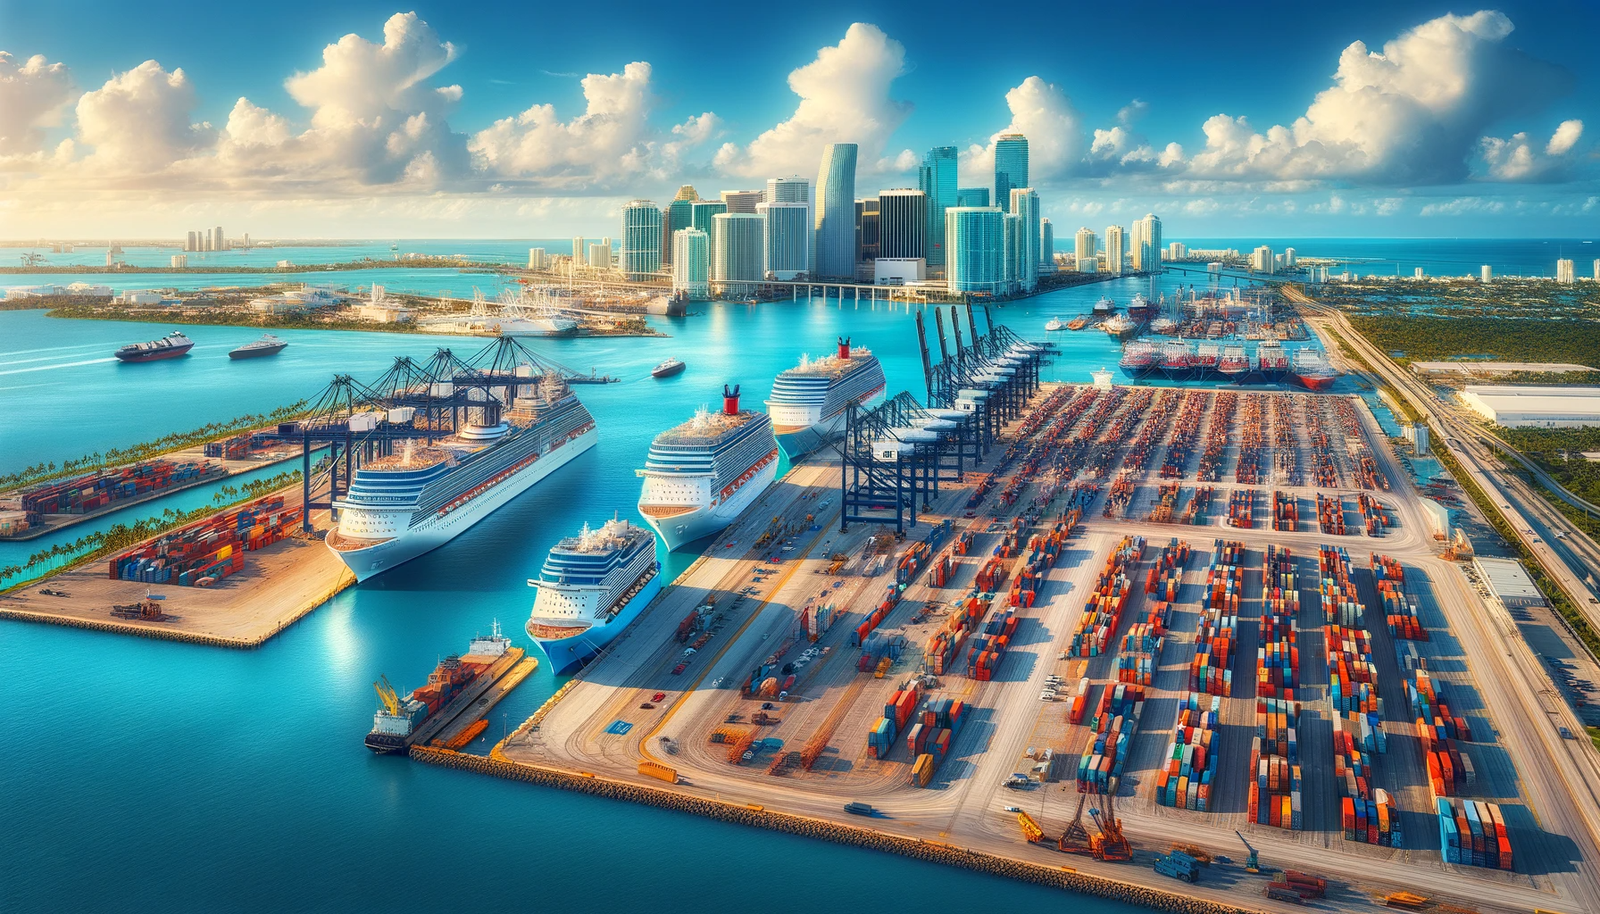 Cruise Ports: Port of Miami, Florida